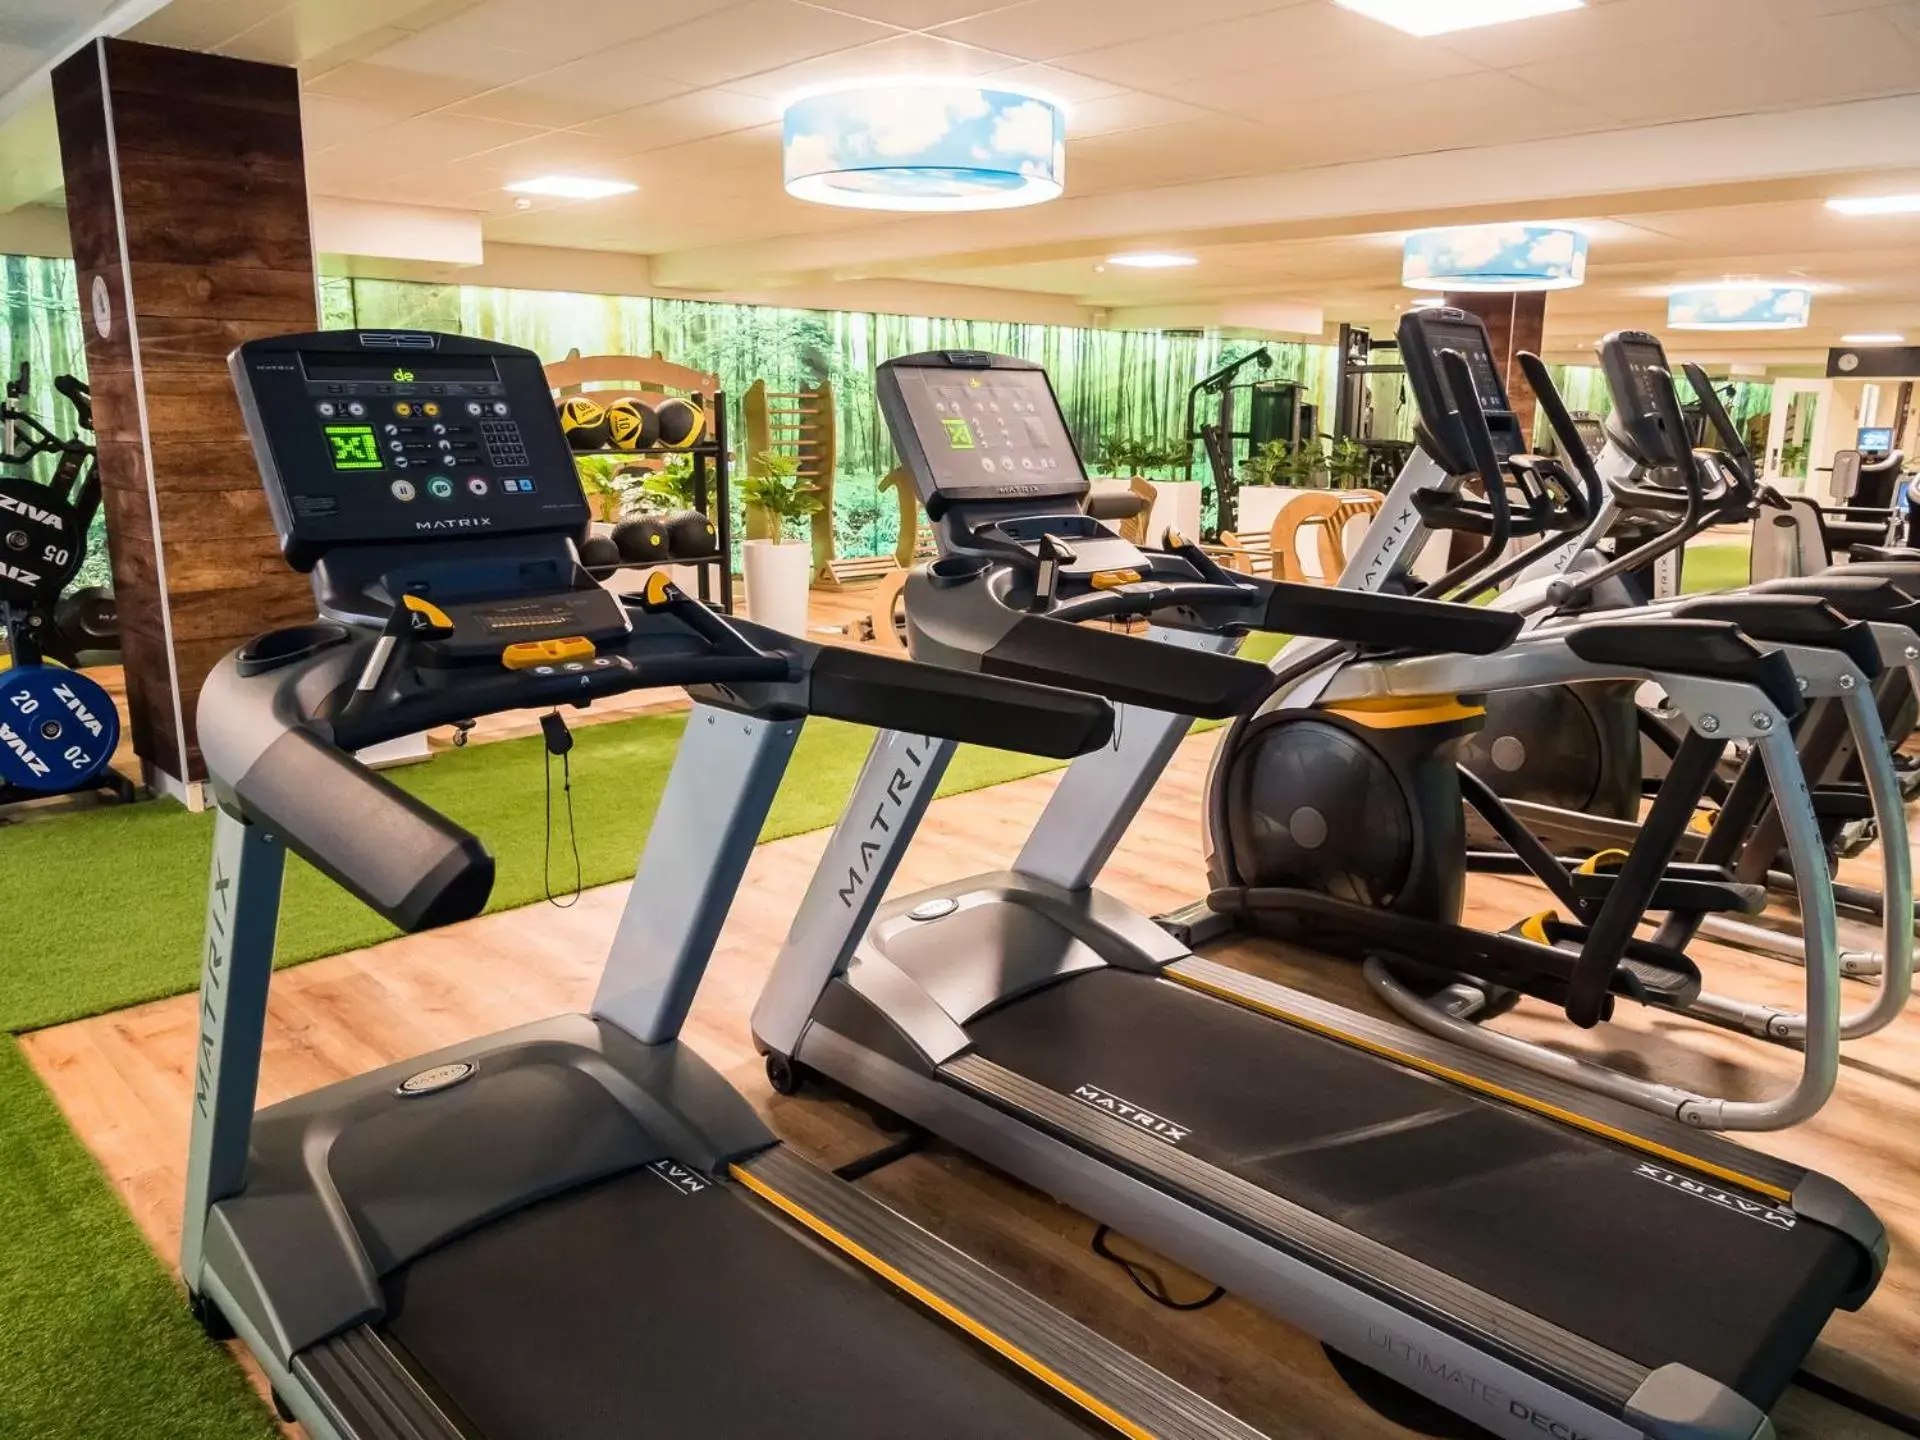 Fitness centre/facilities, Fitness Center/Facilities in Best Western Hotel Slenaken